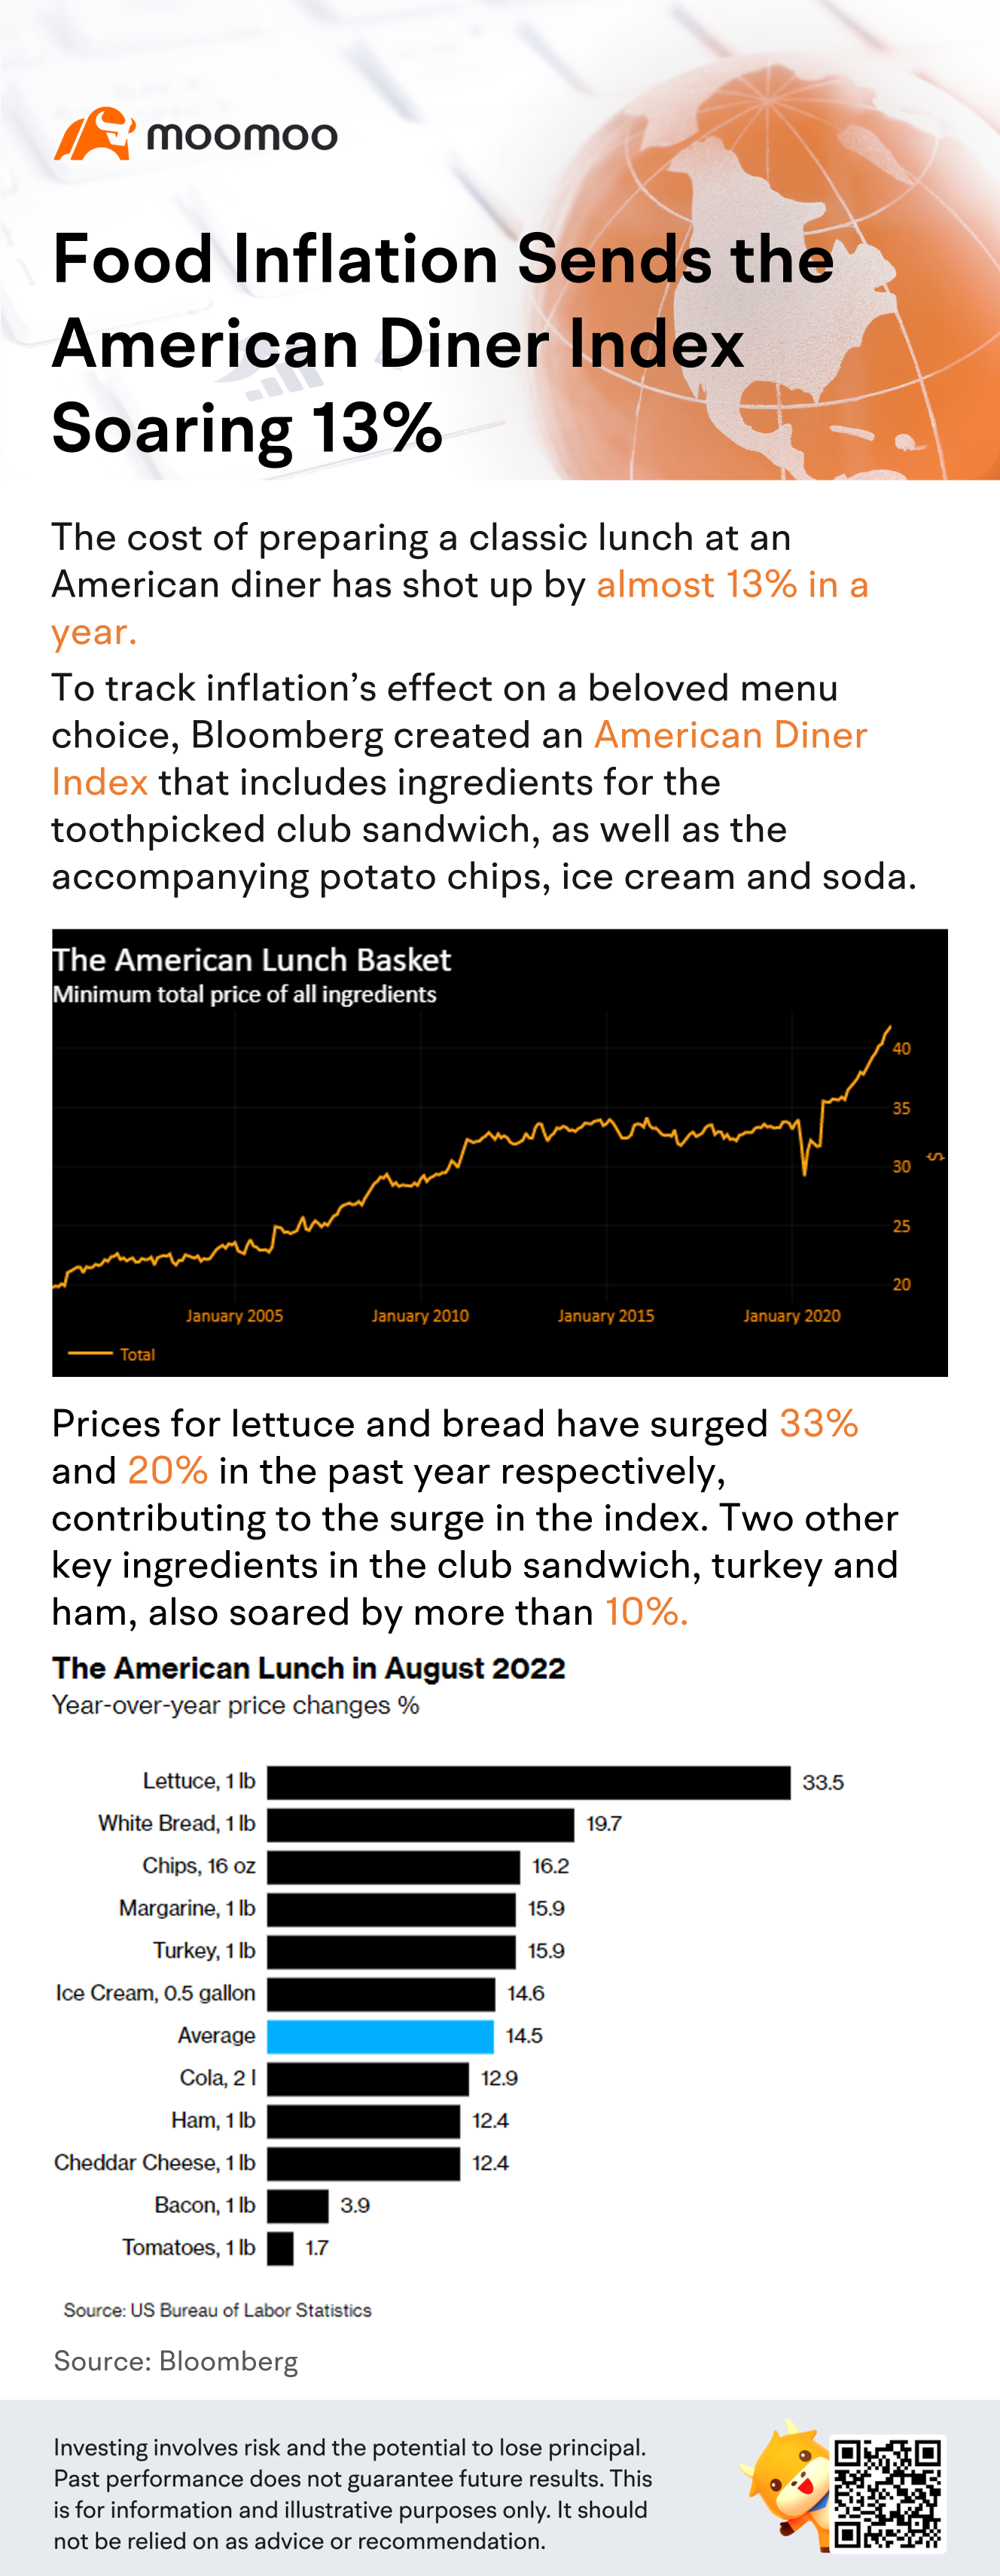 Food Inflation Sends the American Diner Index Soaring 13%